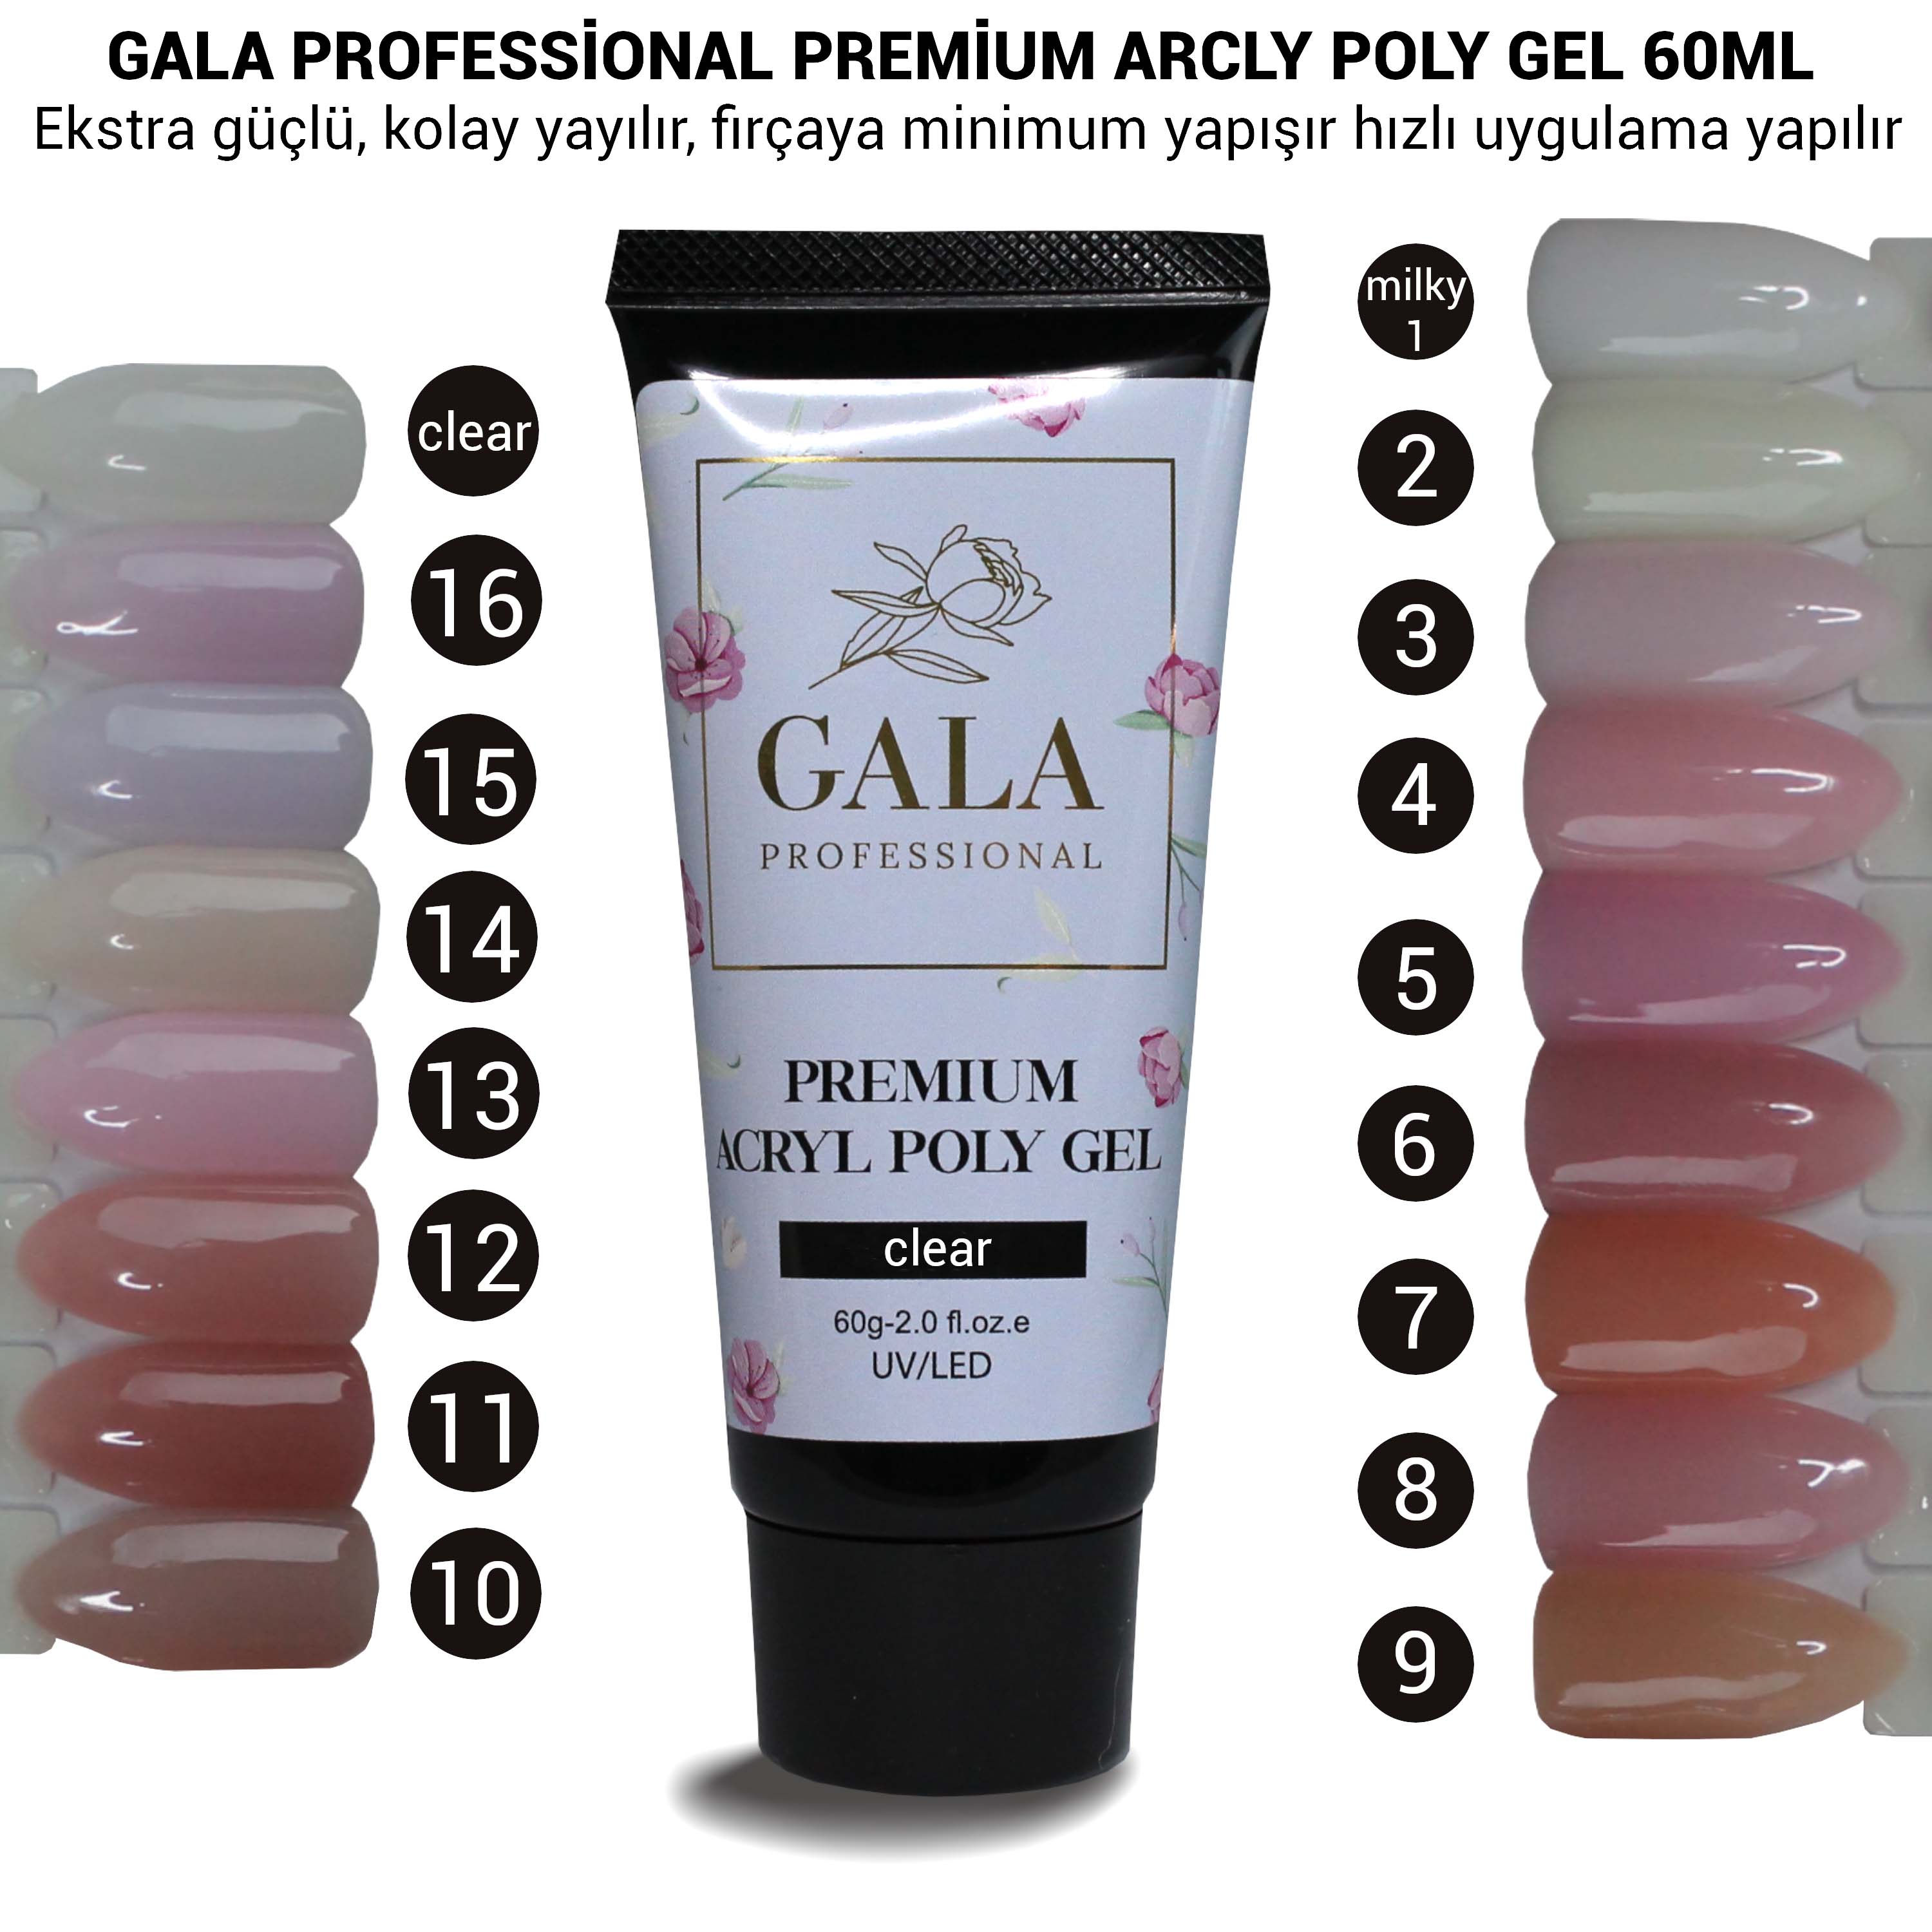 Gala Smart Premium Acryl Poly Gel NO:13